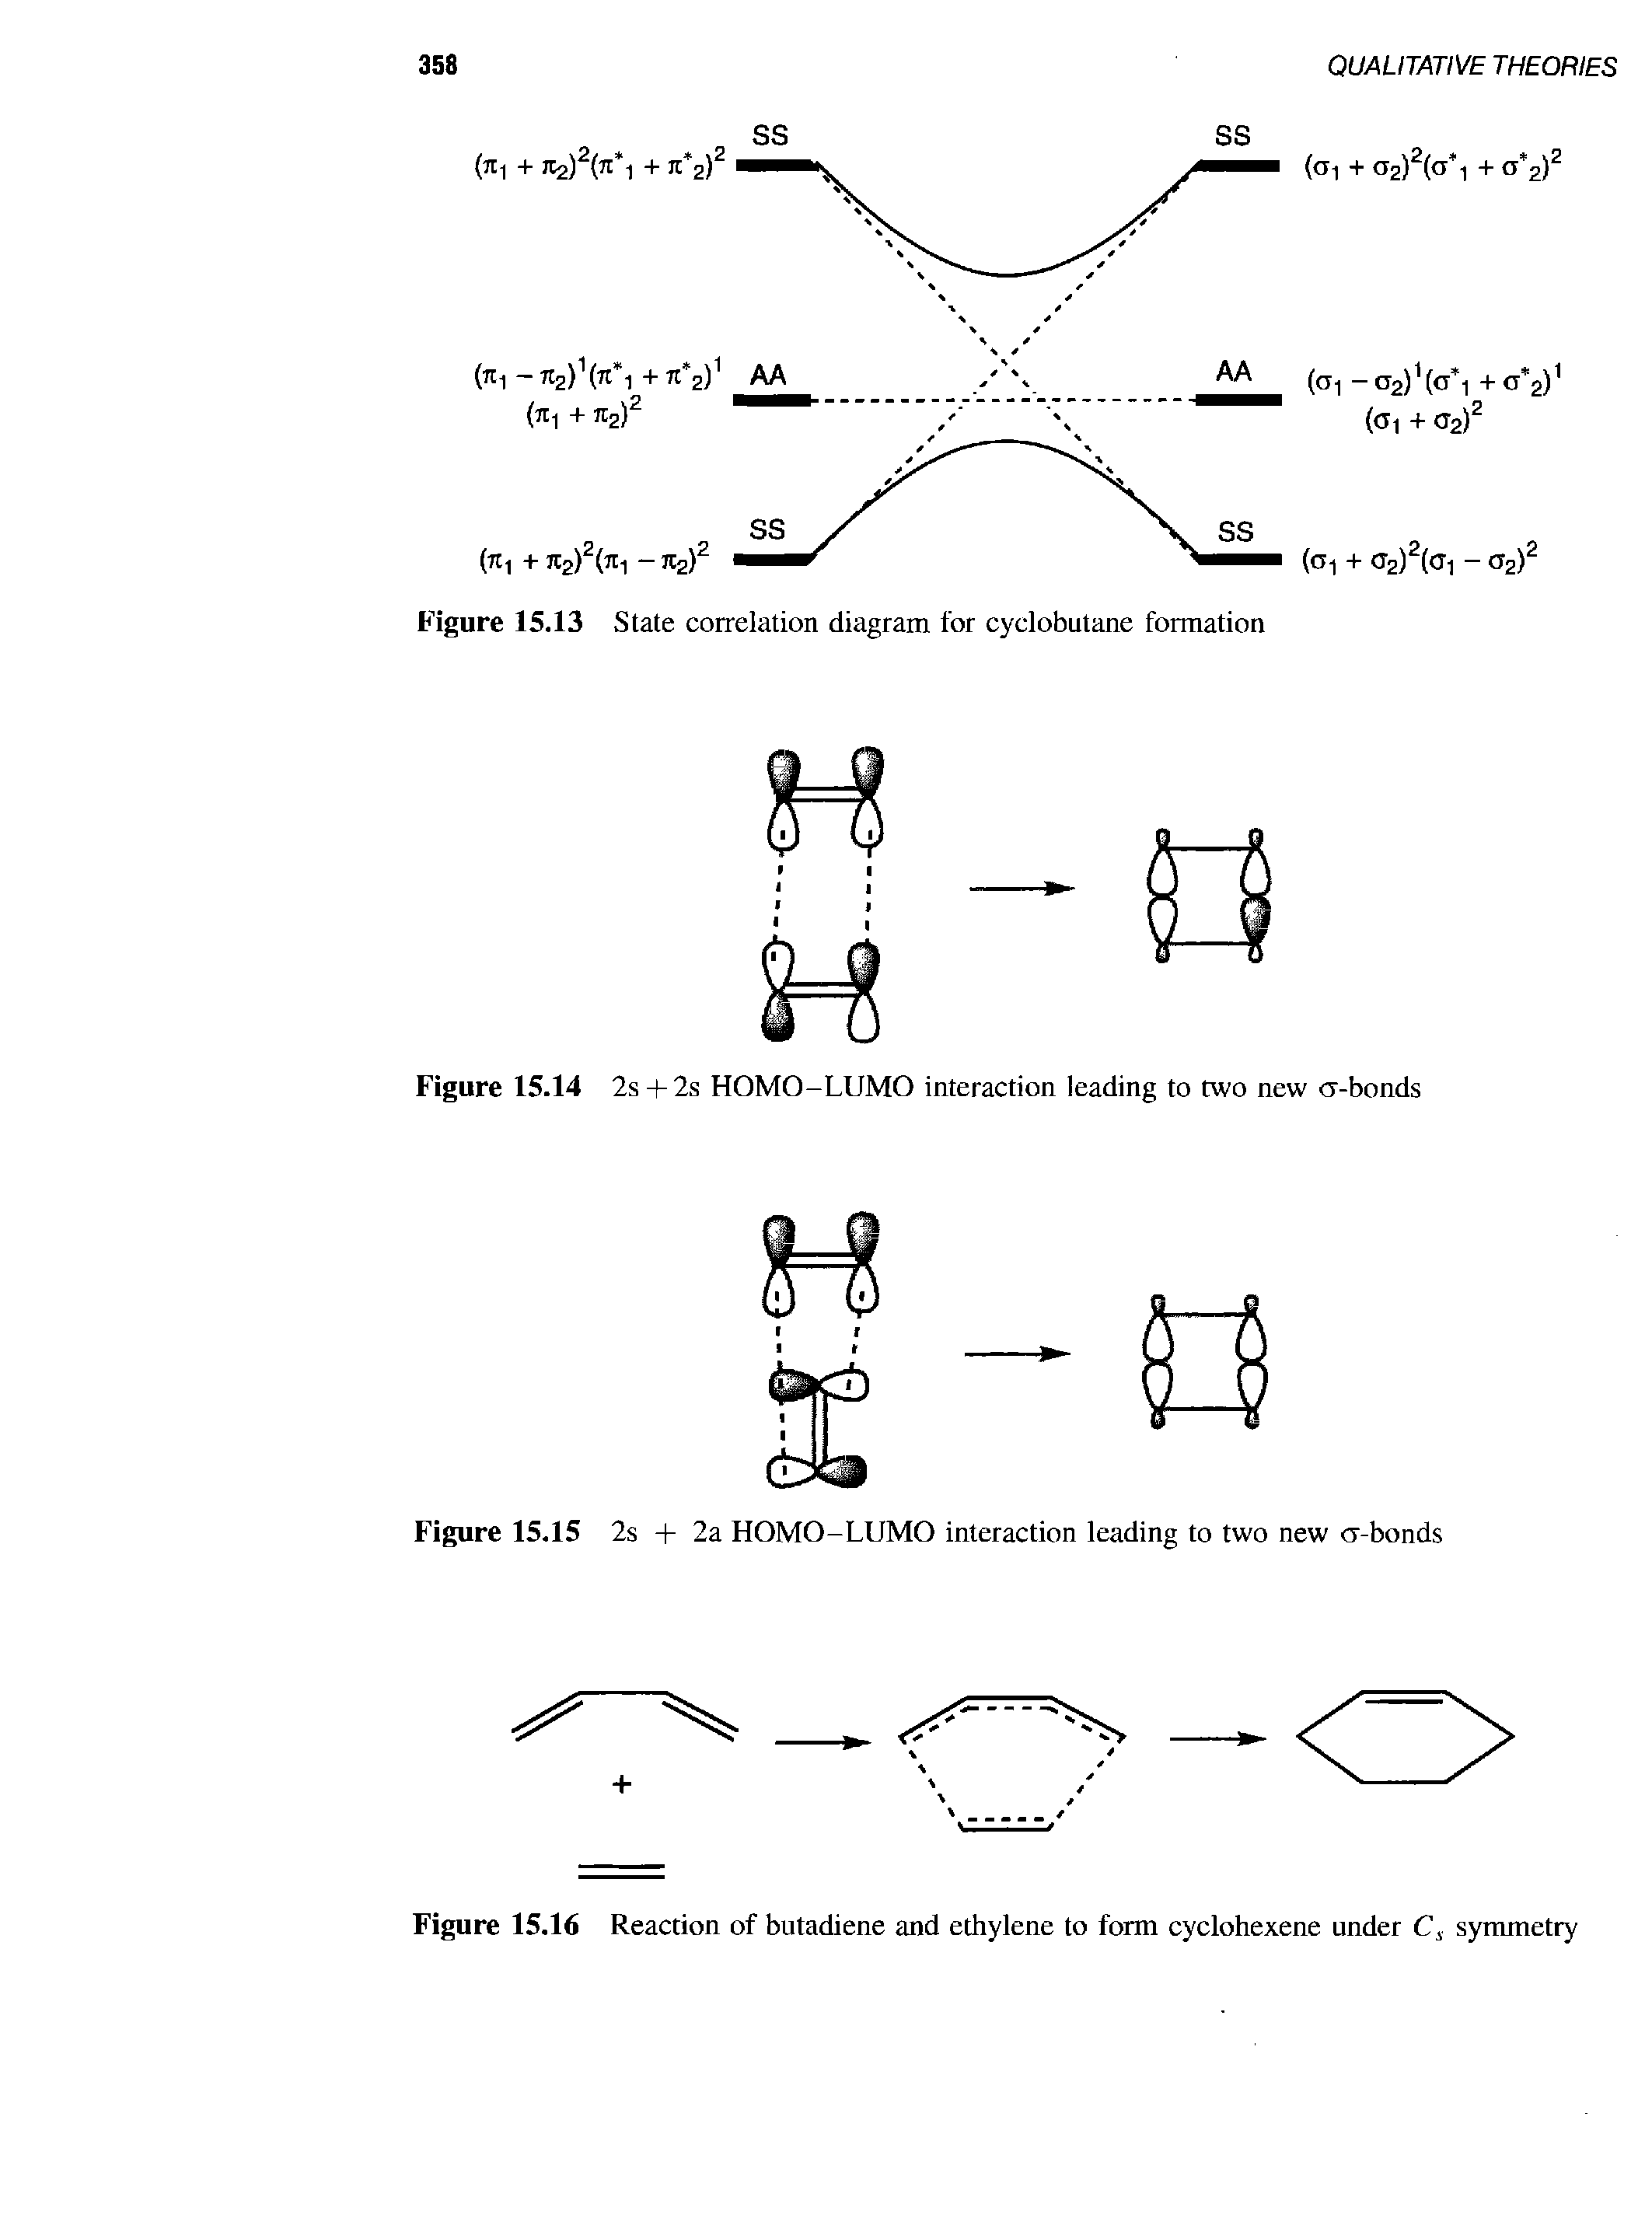 Figure 15.16 Reaction of butadiene and ethylene to form cyclohexene under Cj symmetry...